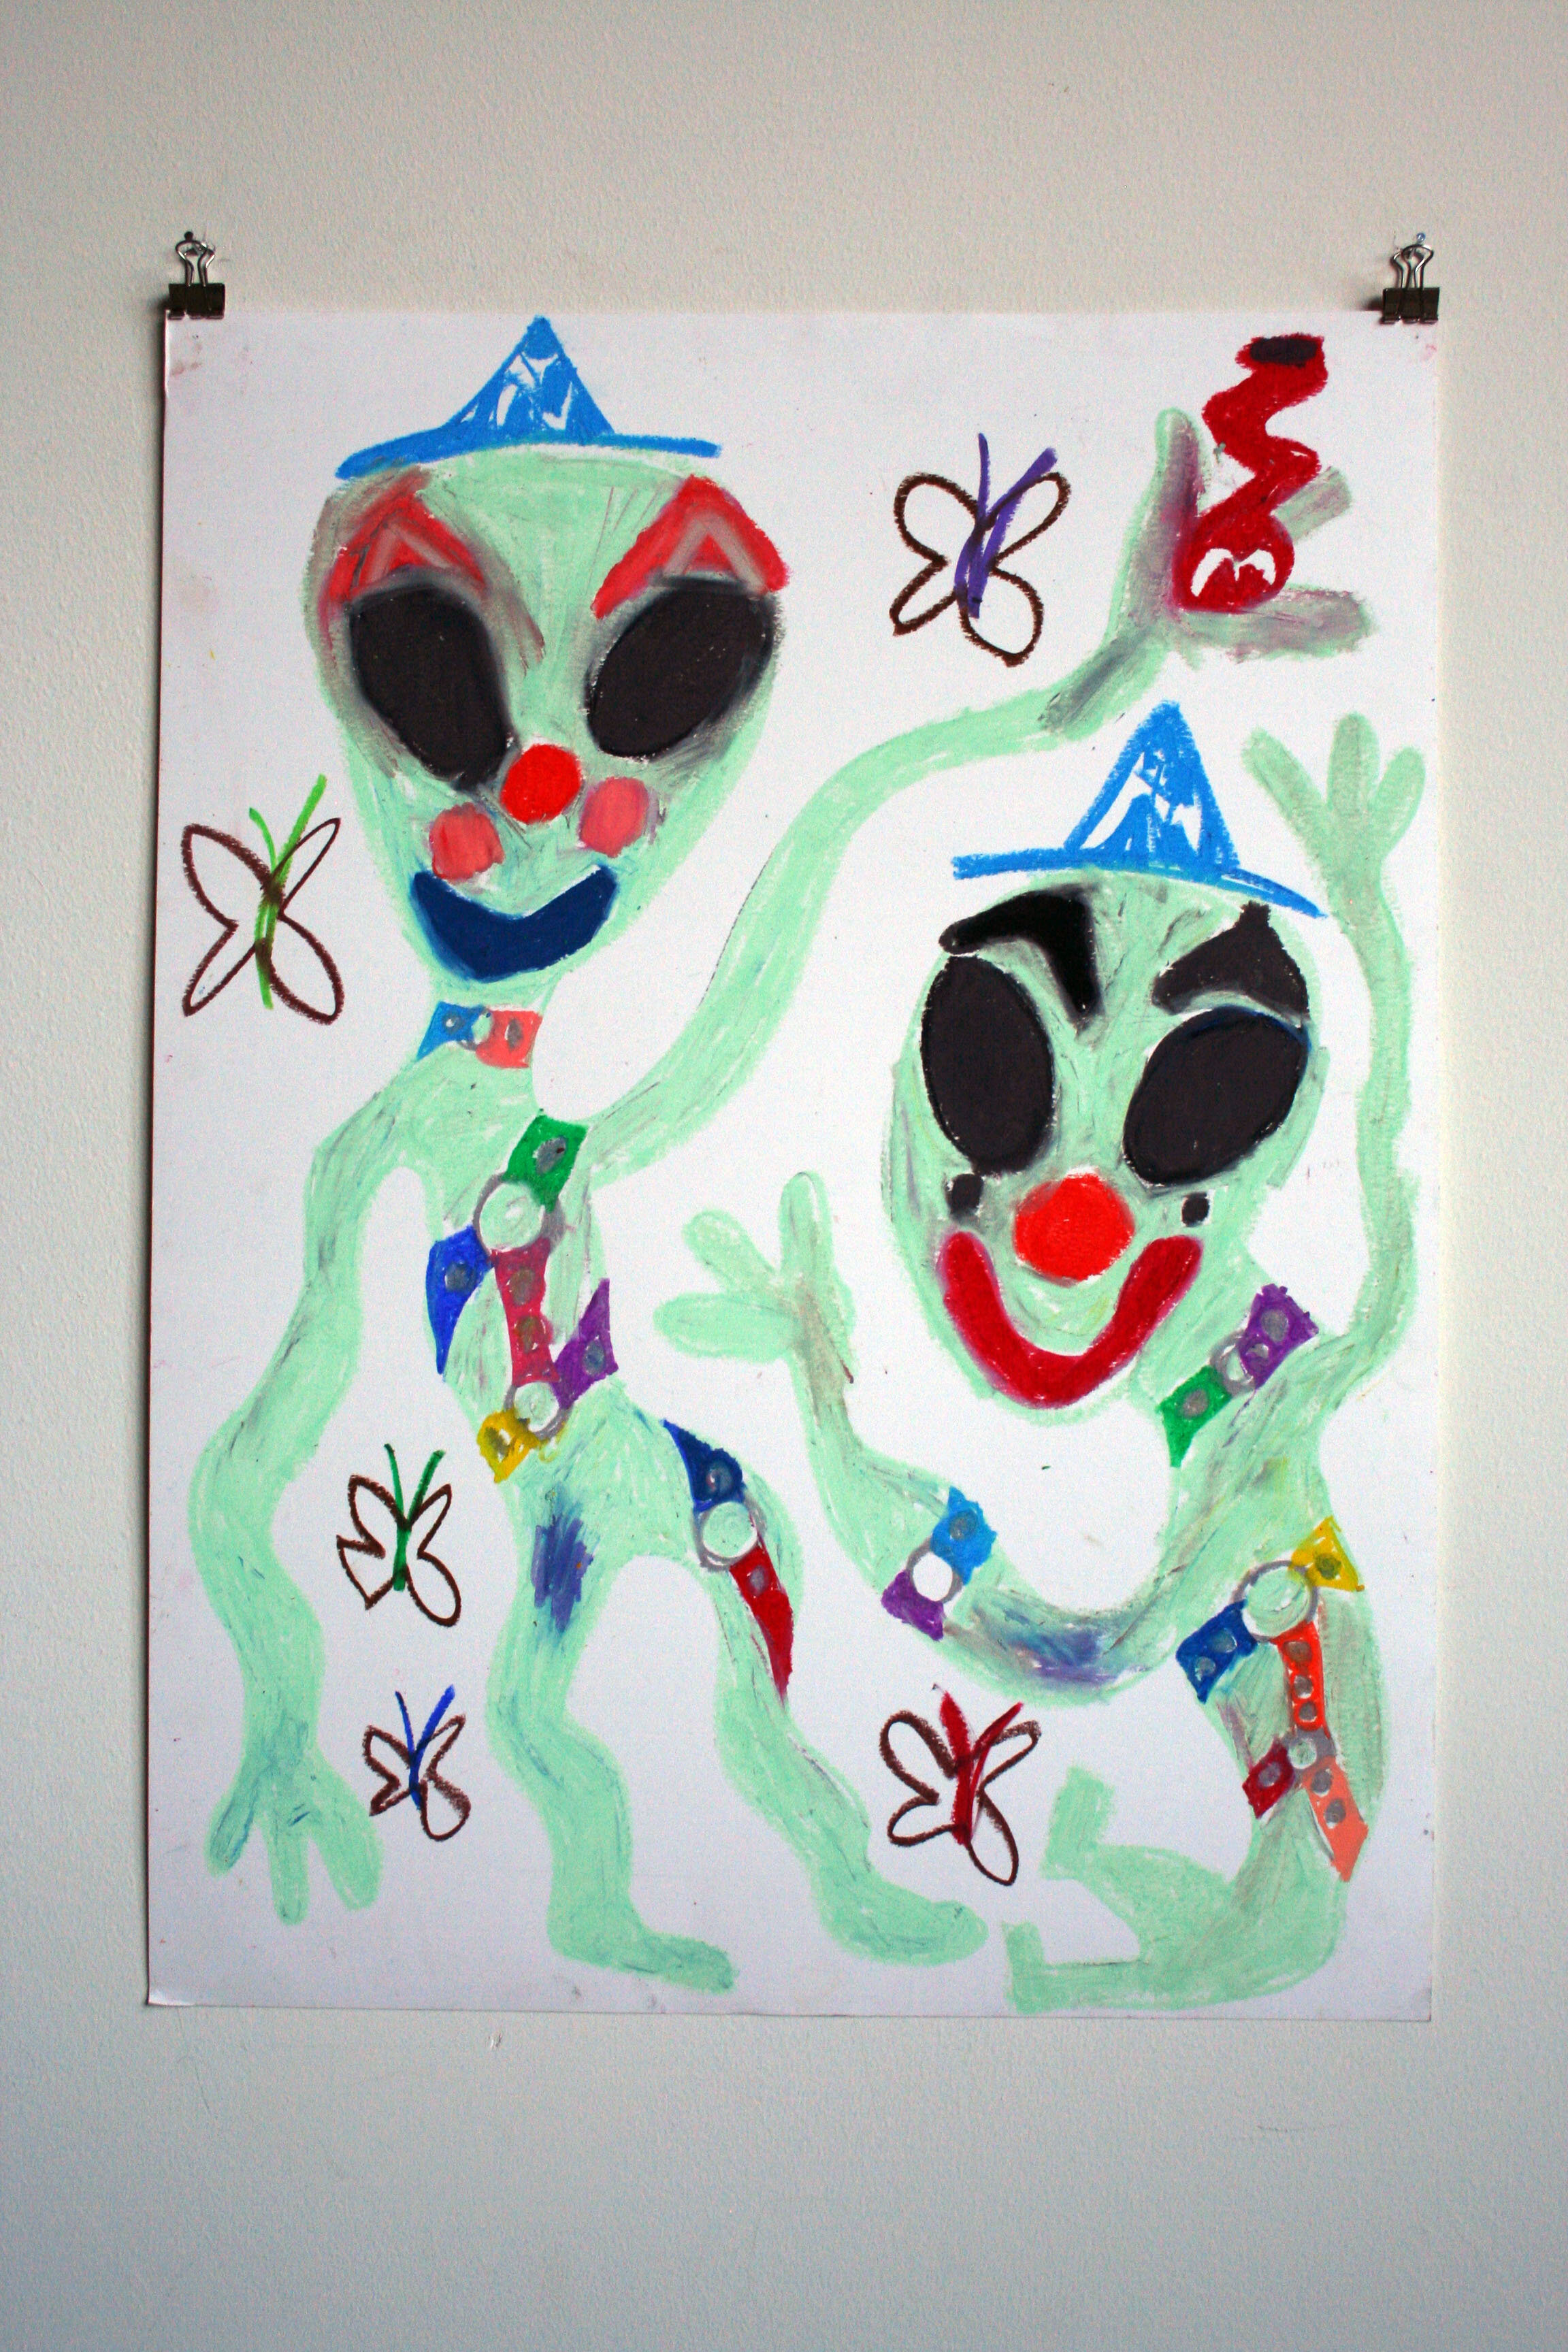   Two Bondage Aliens,  2014  24 x 18 inches (60.96 x 45.72 cm.)  Oil pastel on paper 